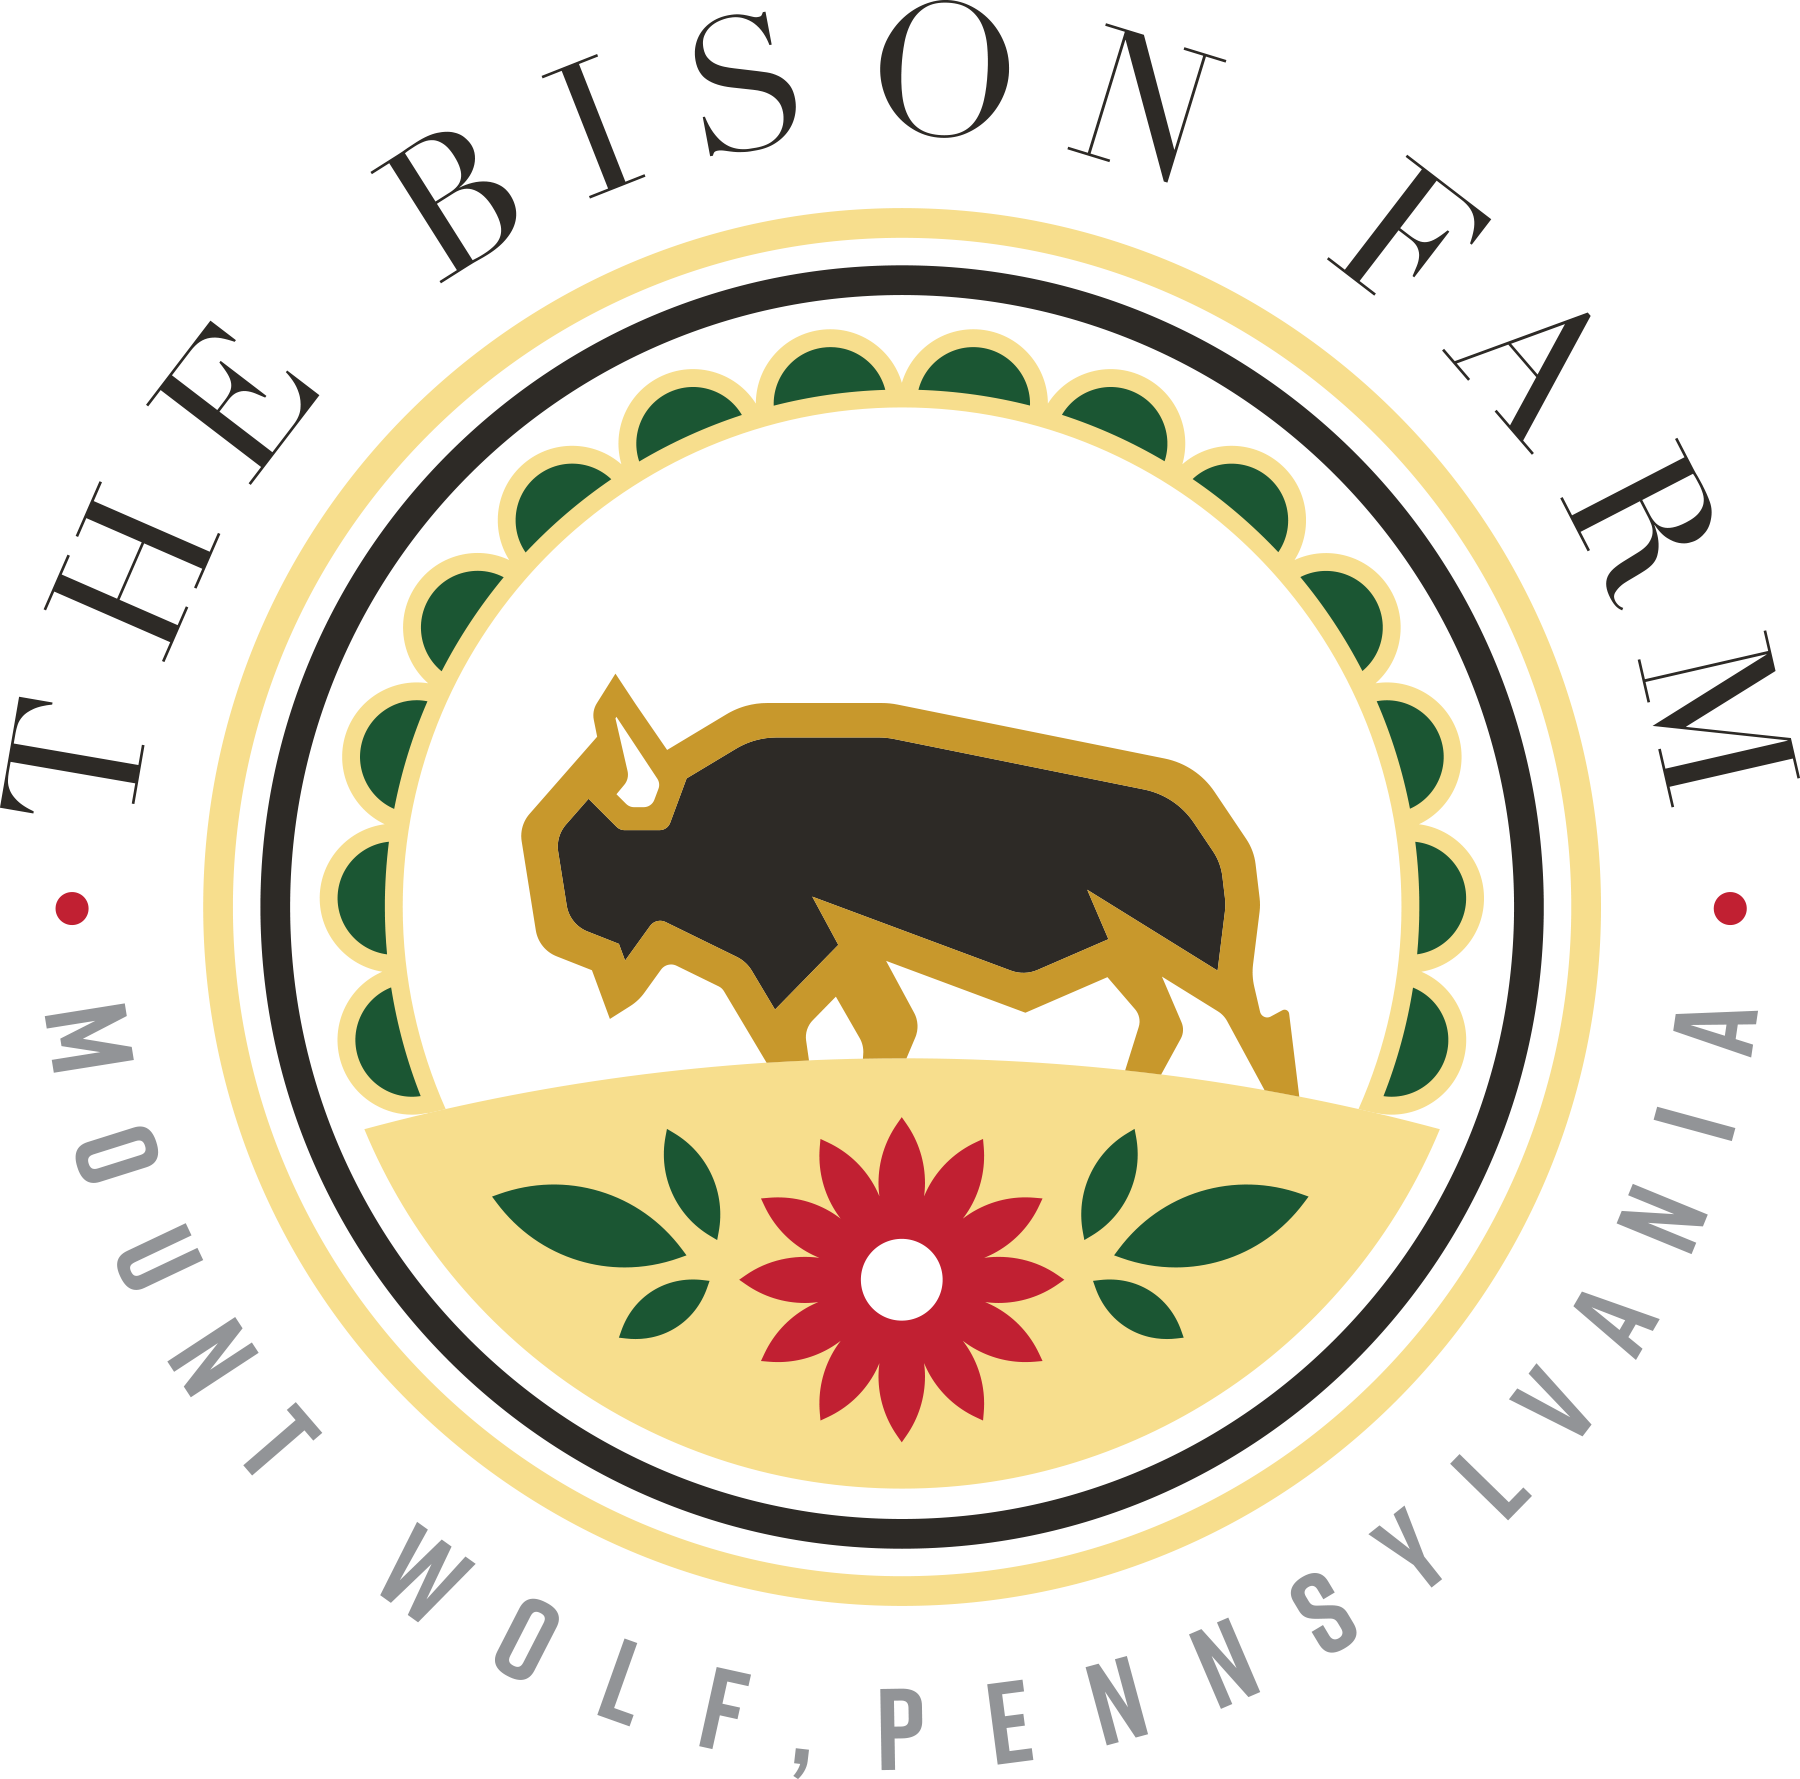 The Bison Farm